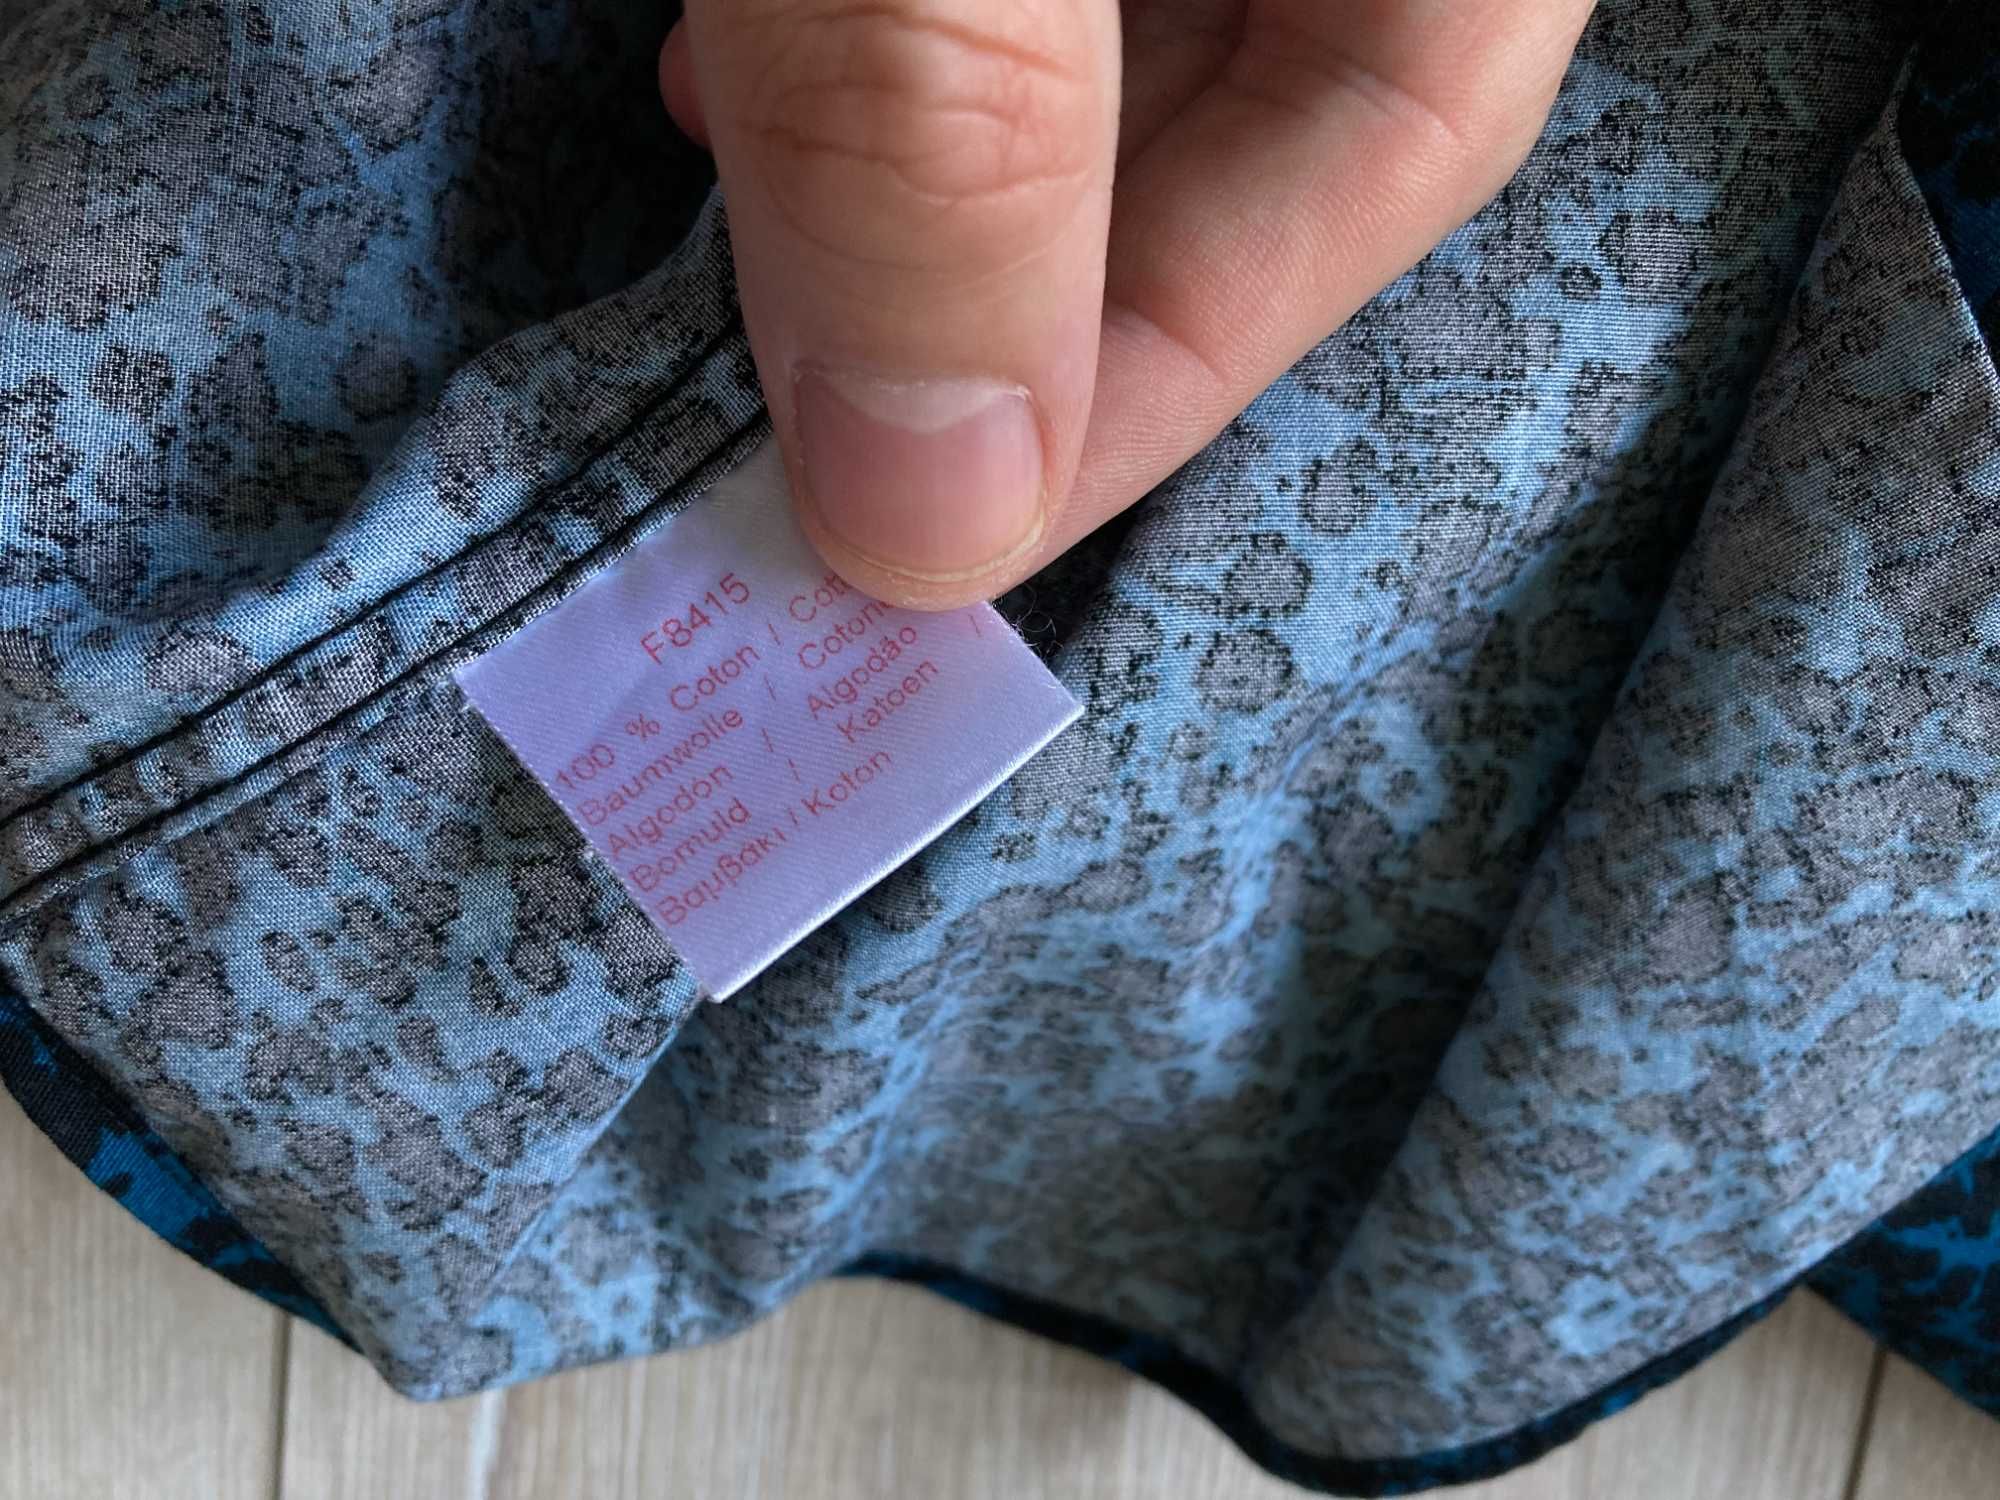 Lacoste LIVE blue animal pattern мъжка риза размер 42